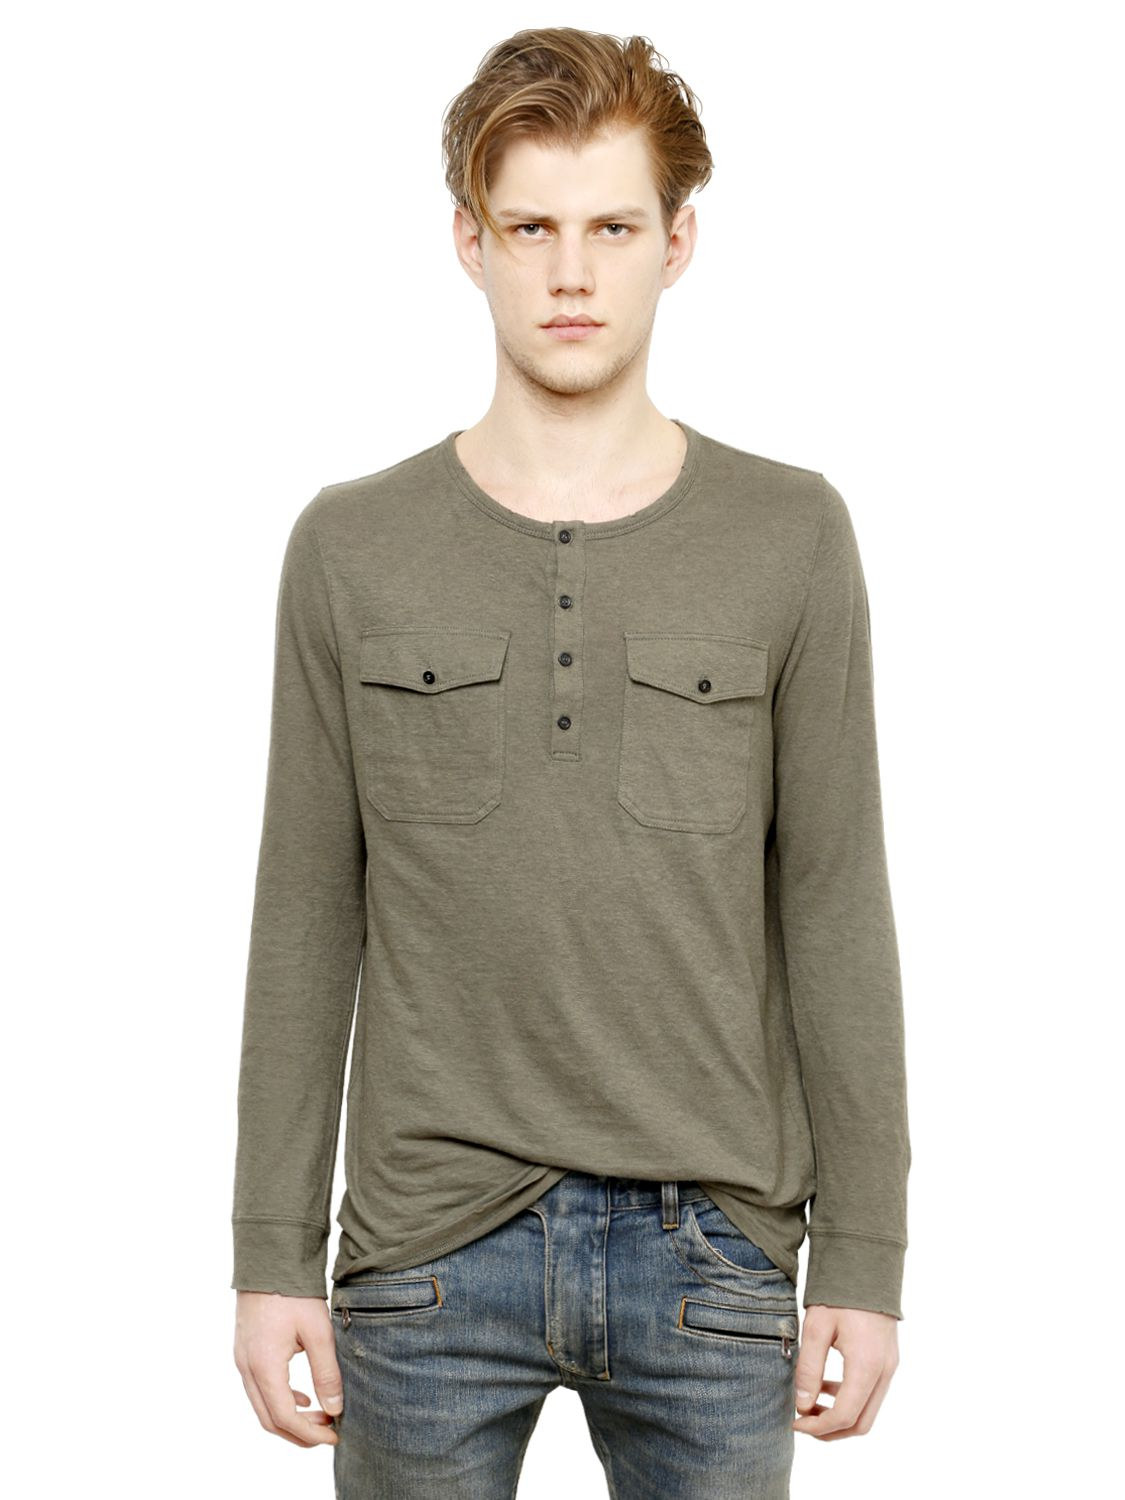 Balmain Long Sleeve Cotton Henley T-Shirt in Khaki (Natural) for Men - Lyst